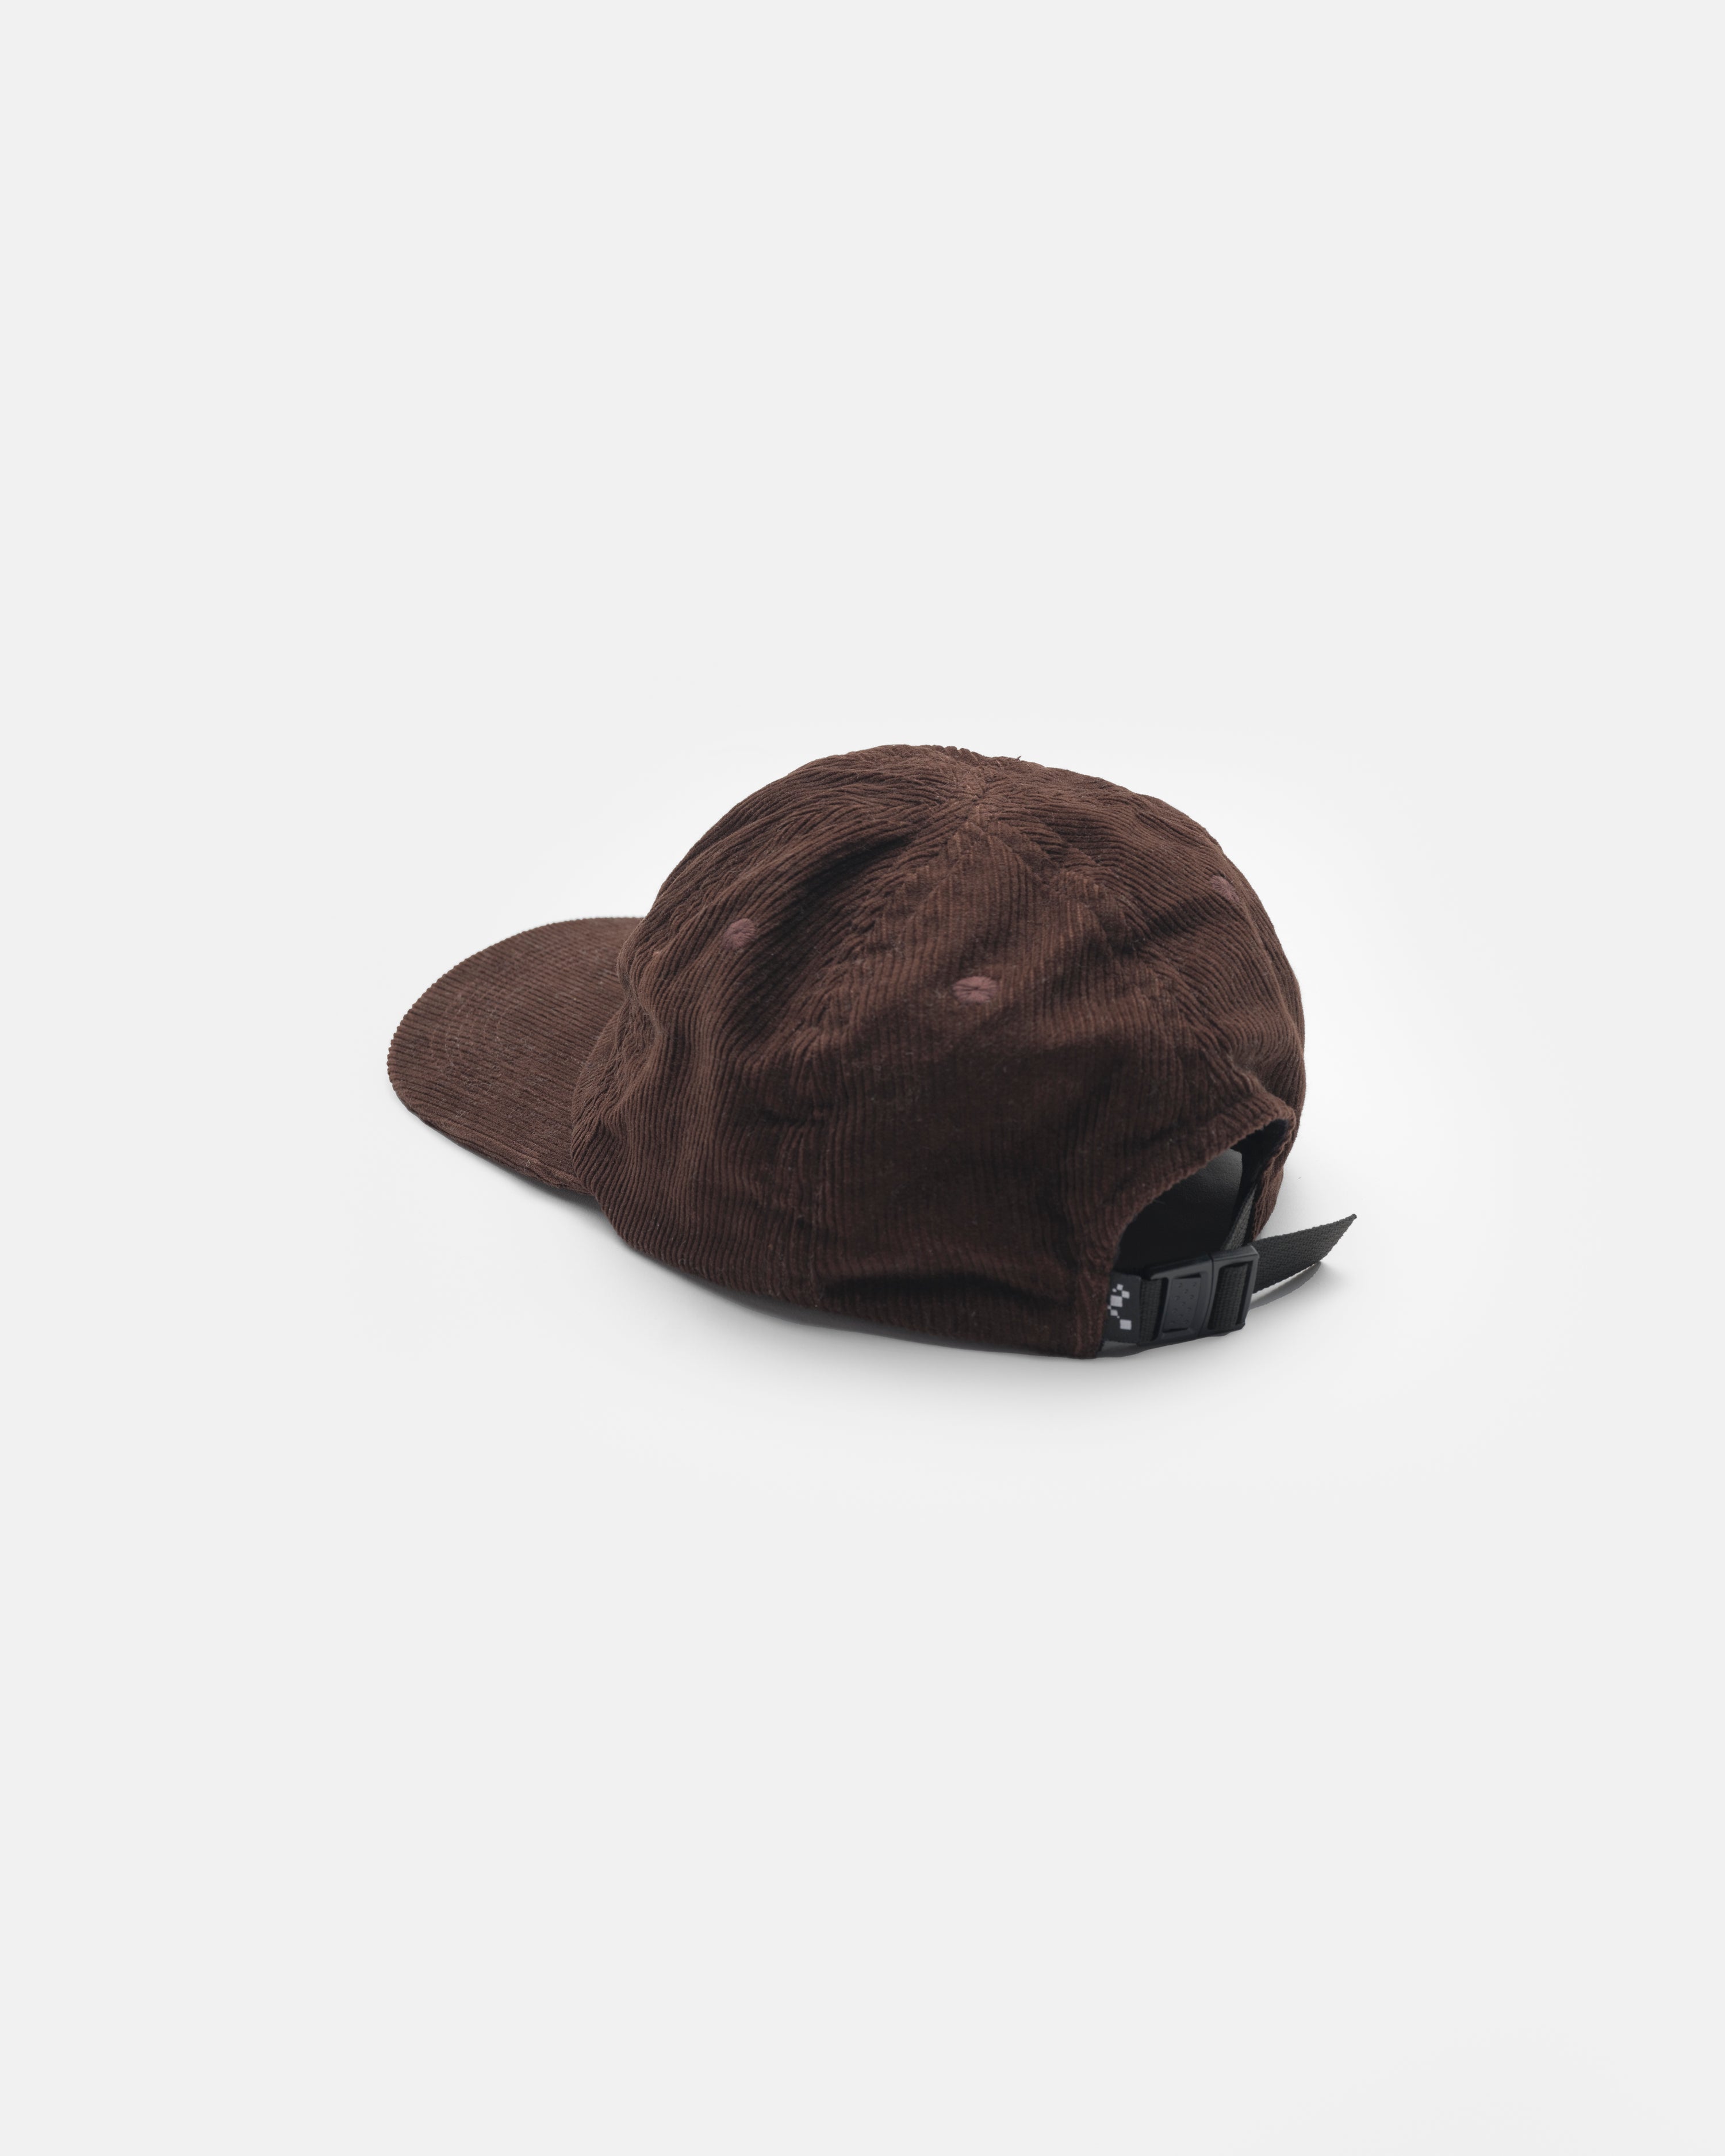 VALLEY SIX PANEL HAT - BROWN CORDUROY